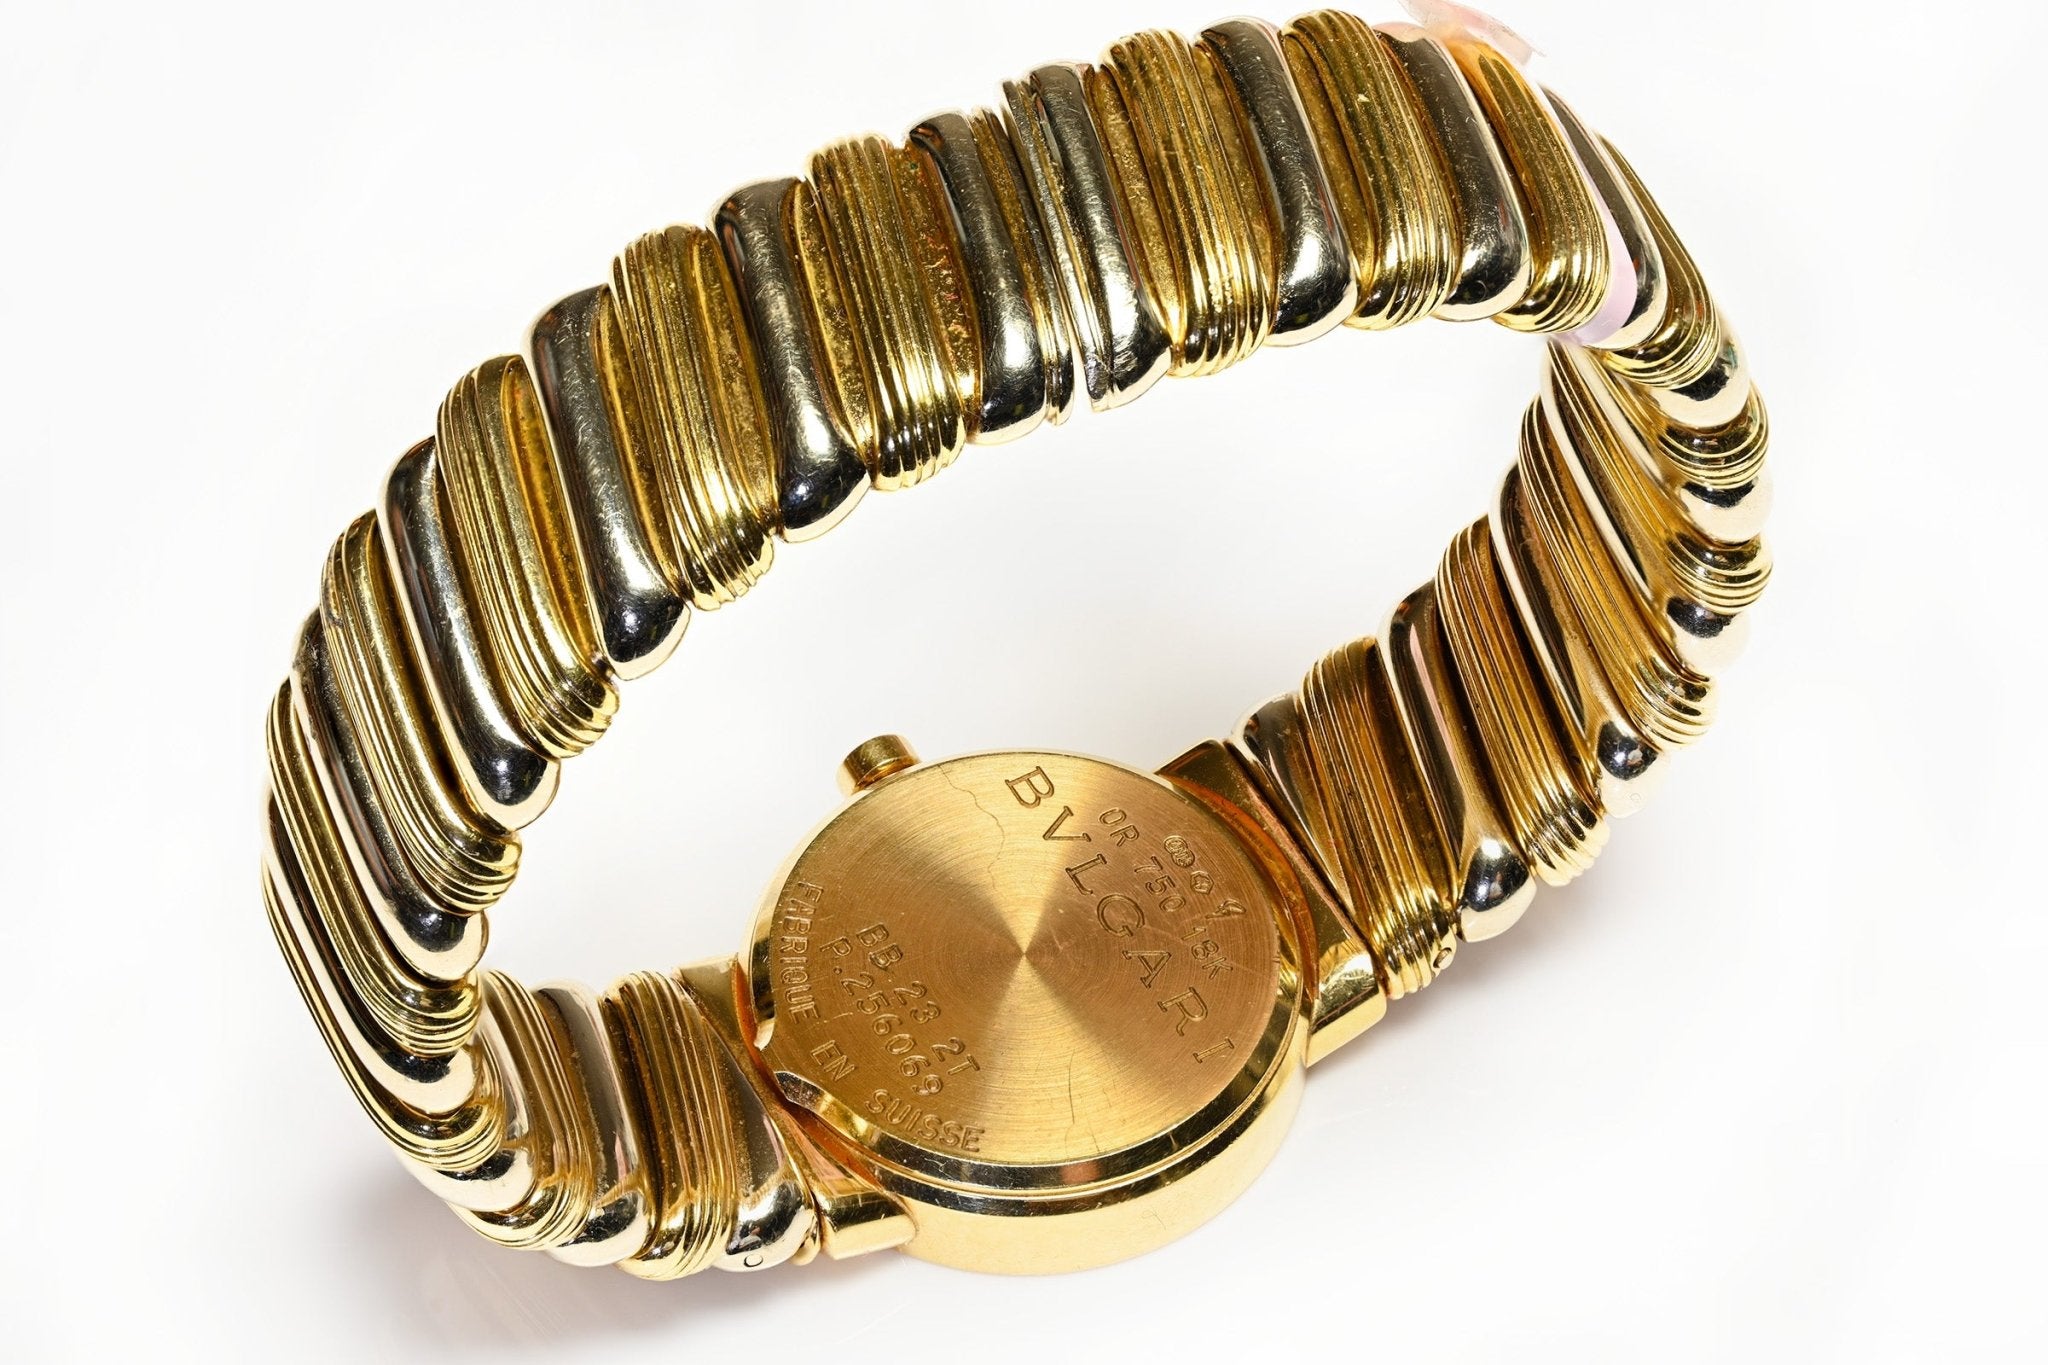 Bulgari Bvlgari 18K Gold Tubogas Bangle Bracelet Watch BB 23 2T - DSF Antique Jewelry